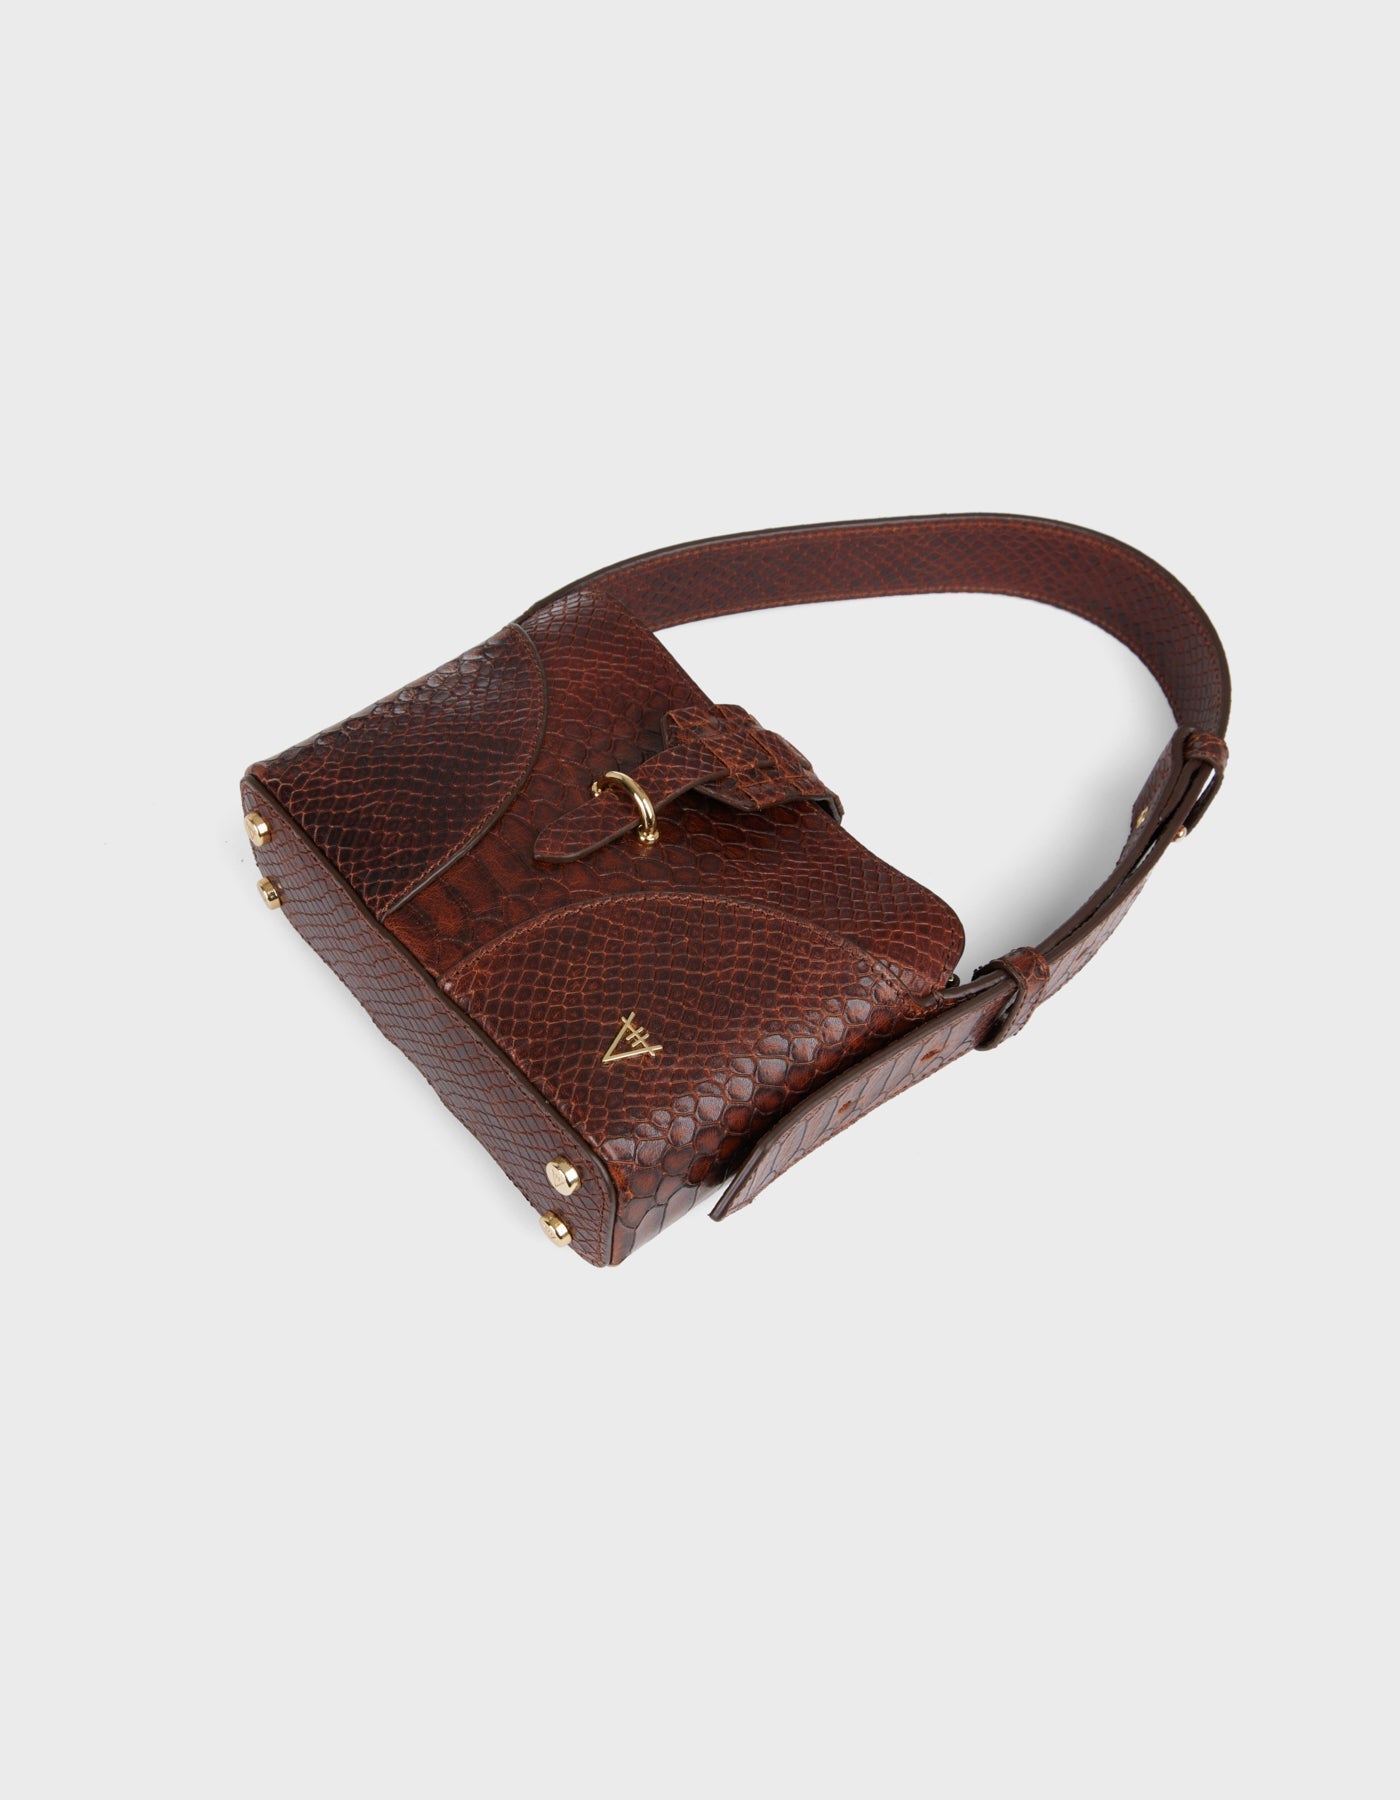 Luna Shoulder Bag - Finest Quality HiVa Atelier GmbH Leather Accessories